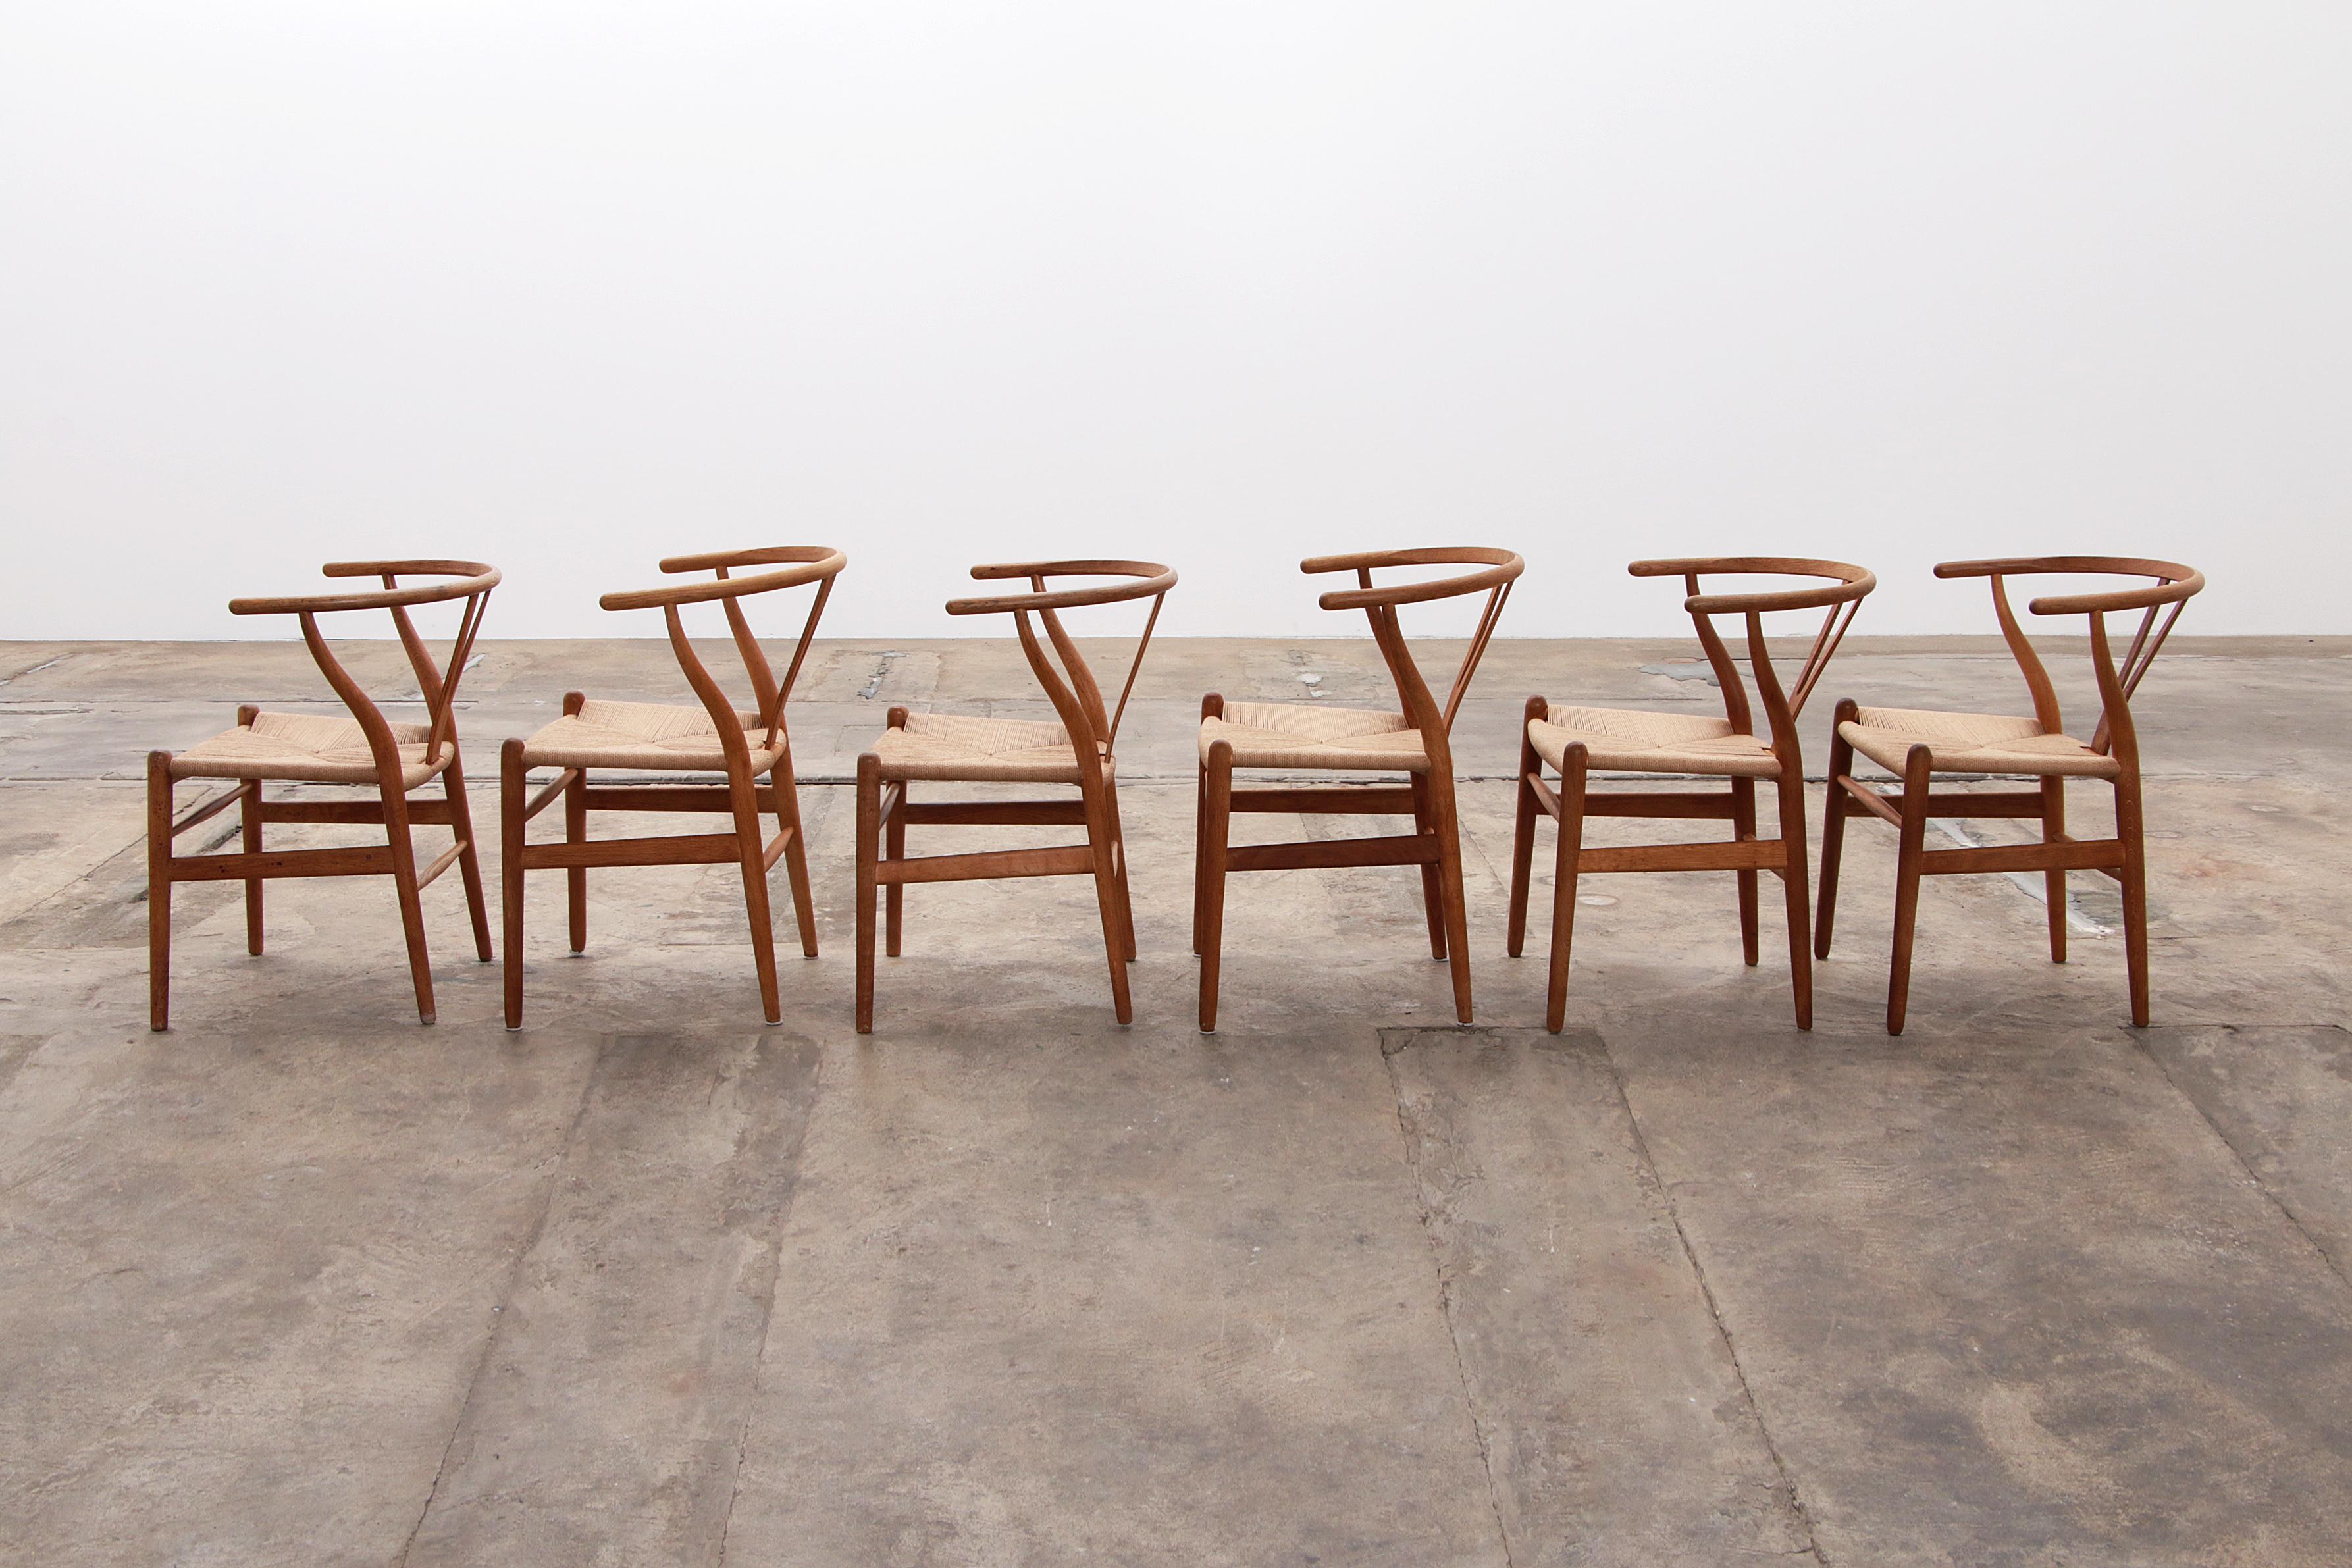 Danish Hans Wegner Oak Wishbone Chairs made by Carl Hansen&Son